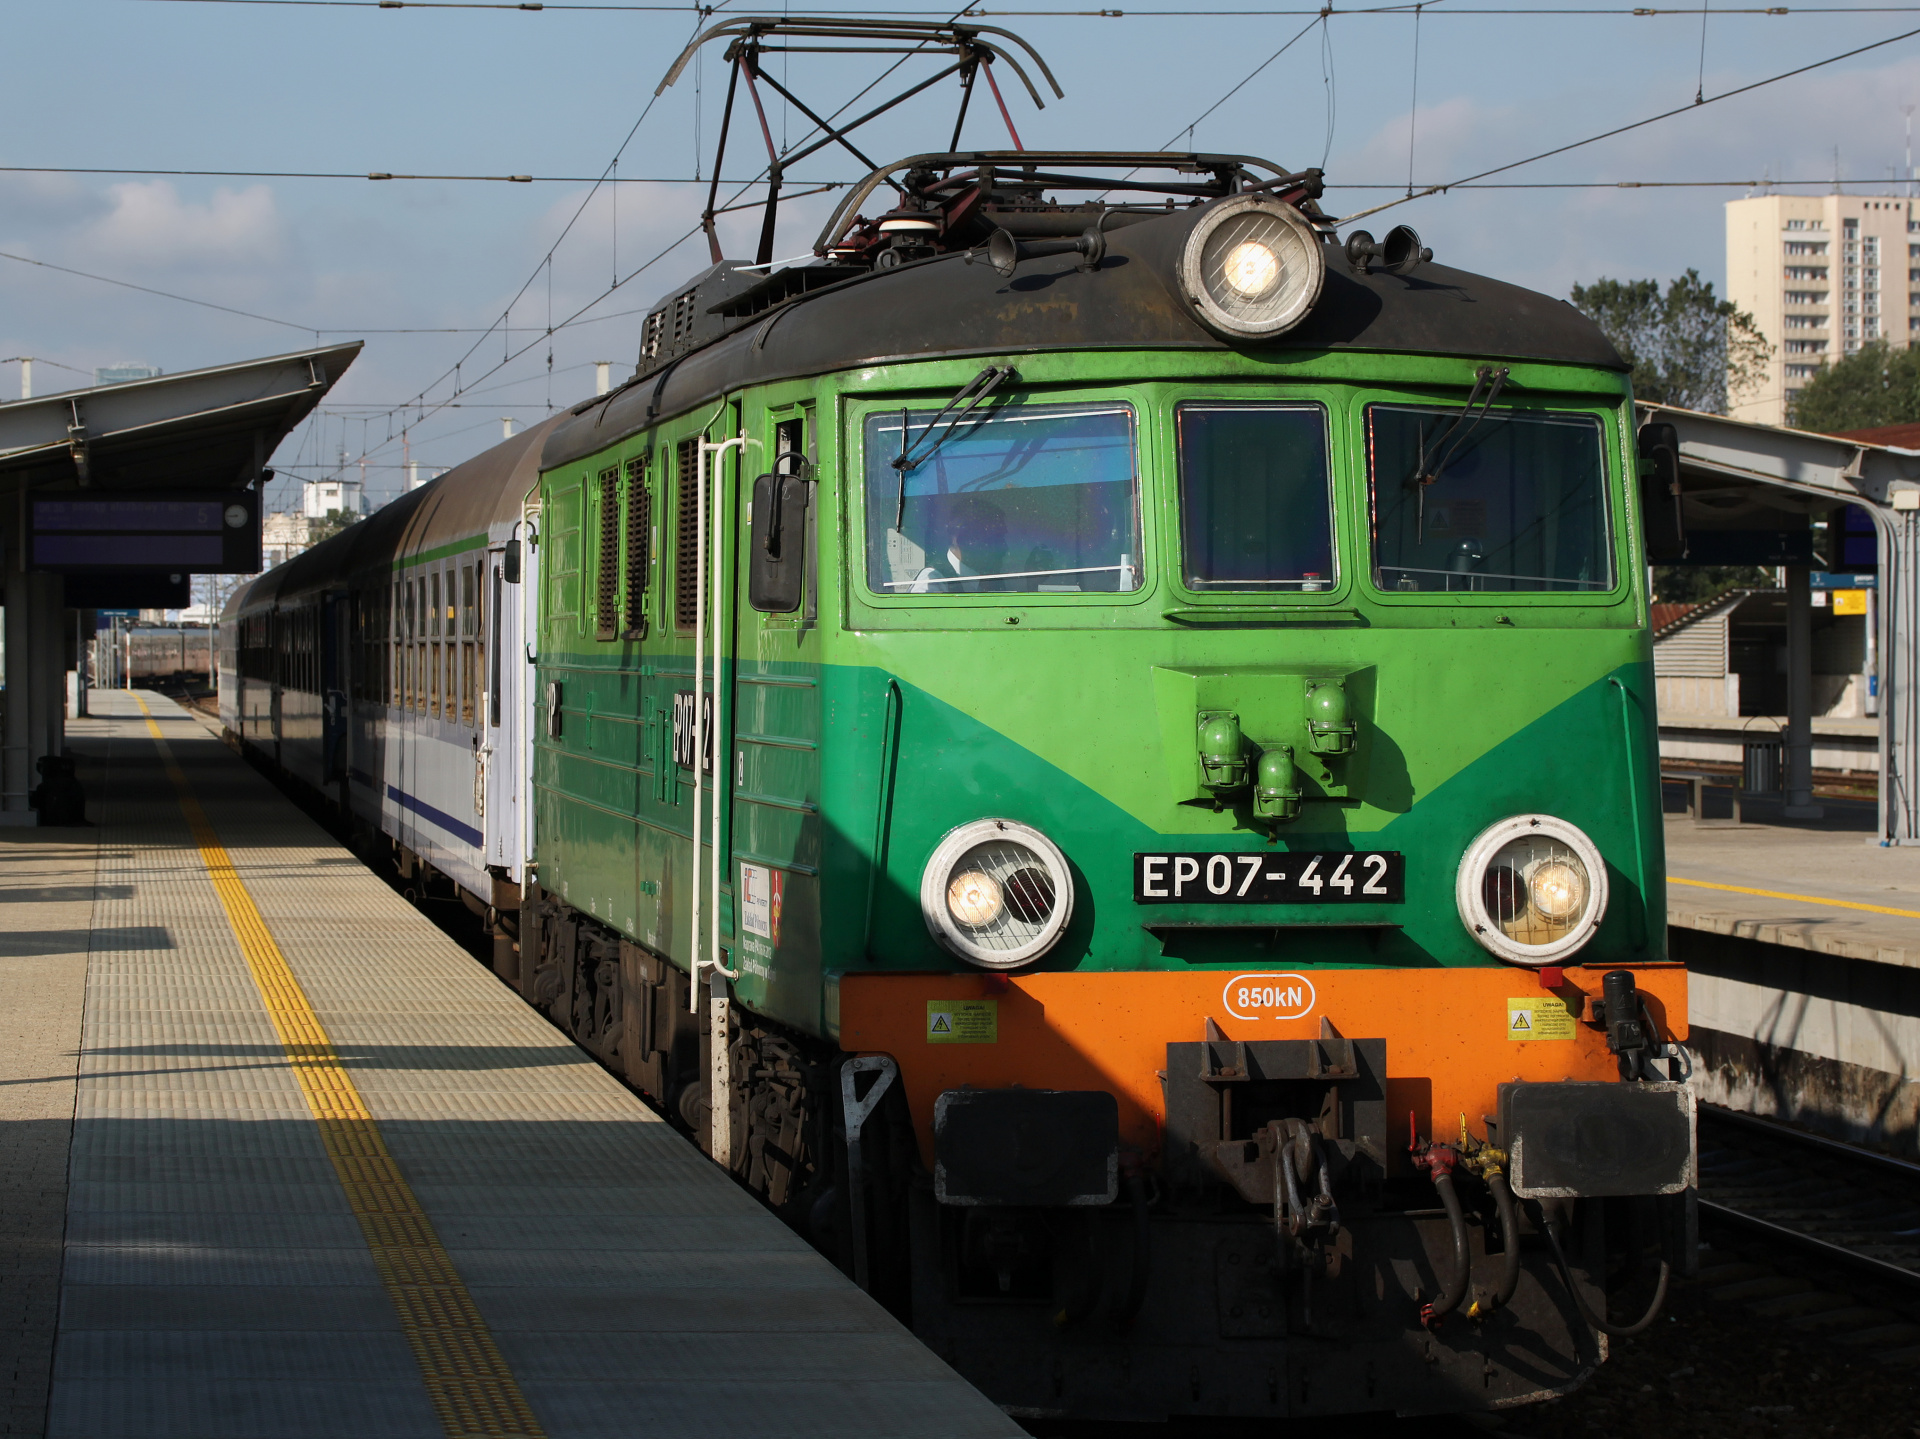 EP07-442 (retro livery) (Vehicles » Trains and Locomotives » HCP 303E)